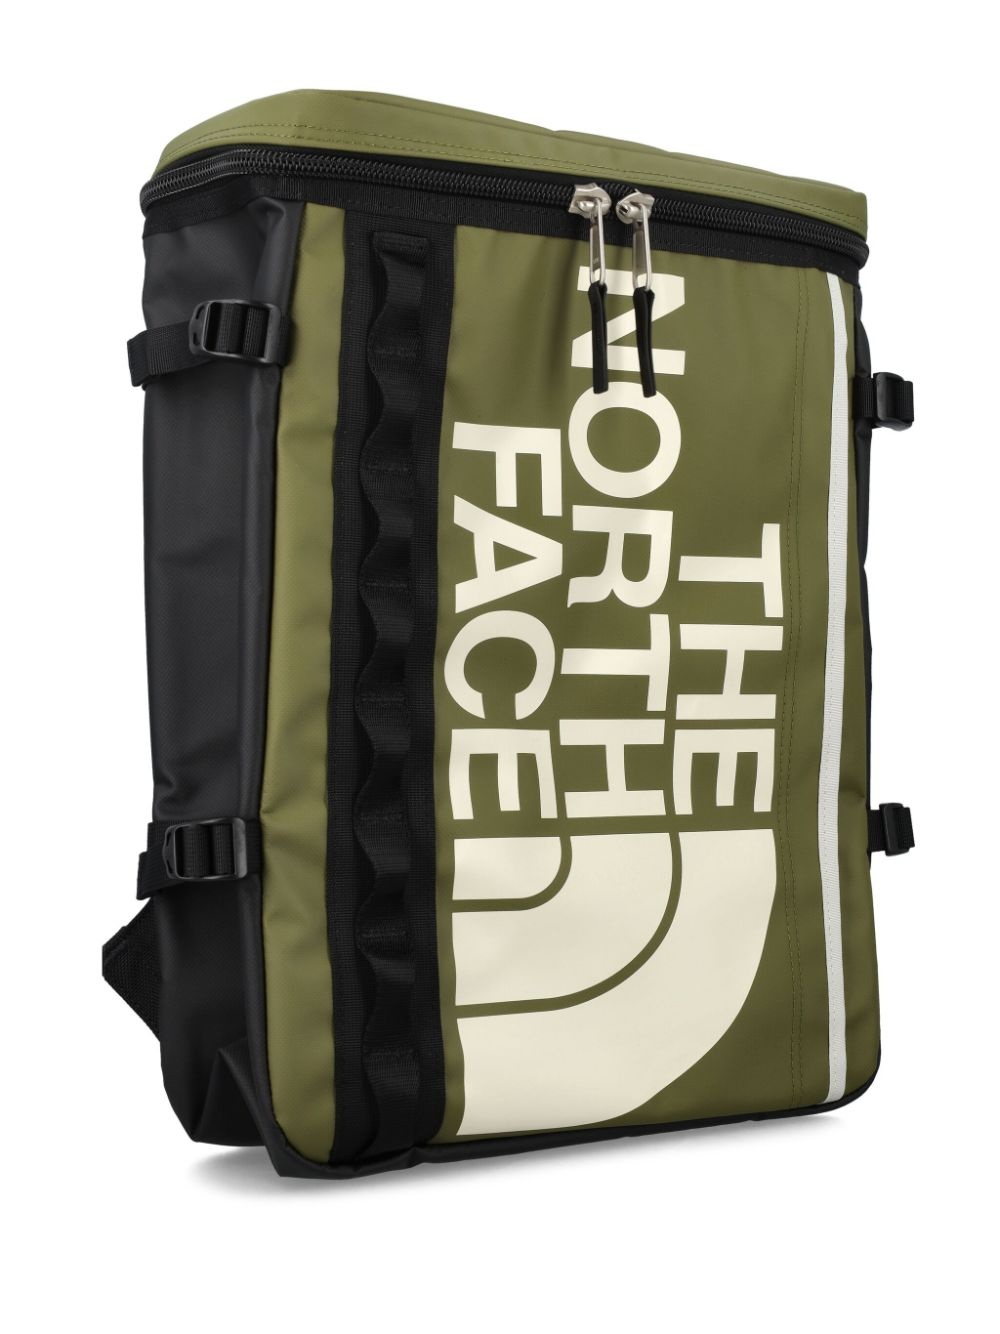 Base Camp Fuse Box backpack - 3